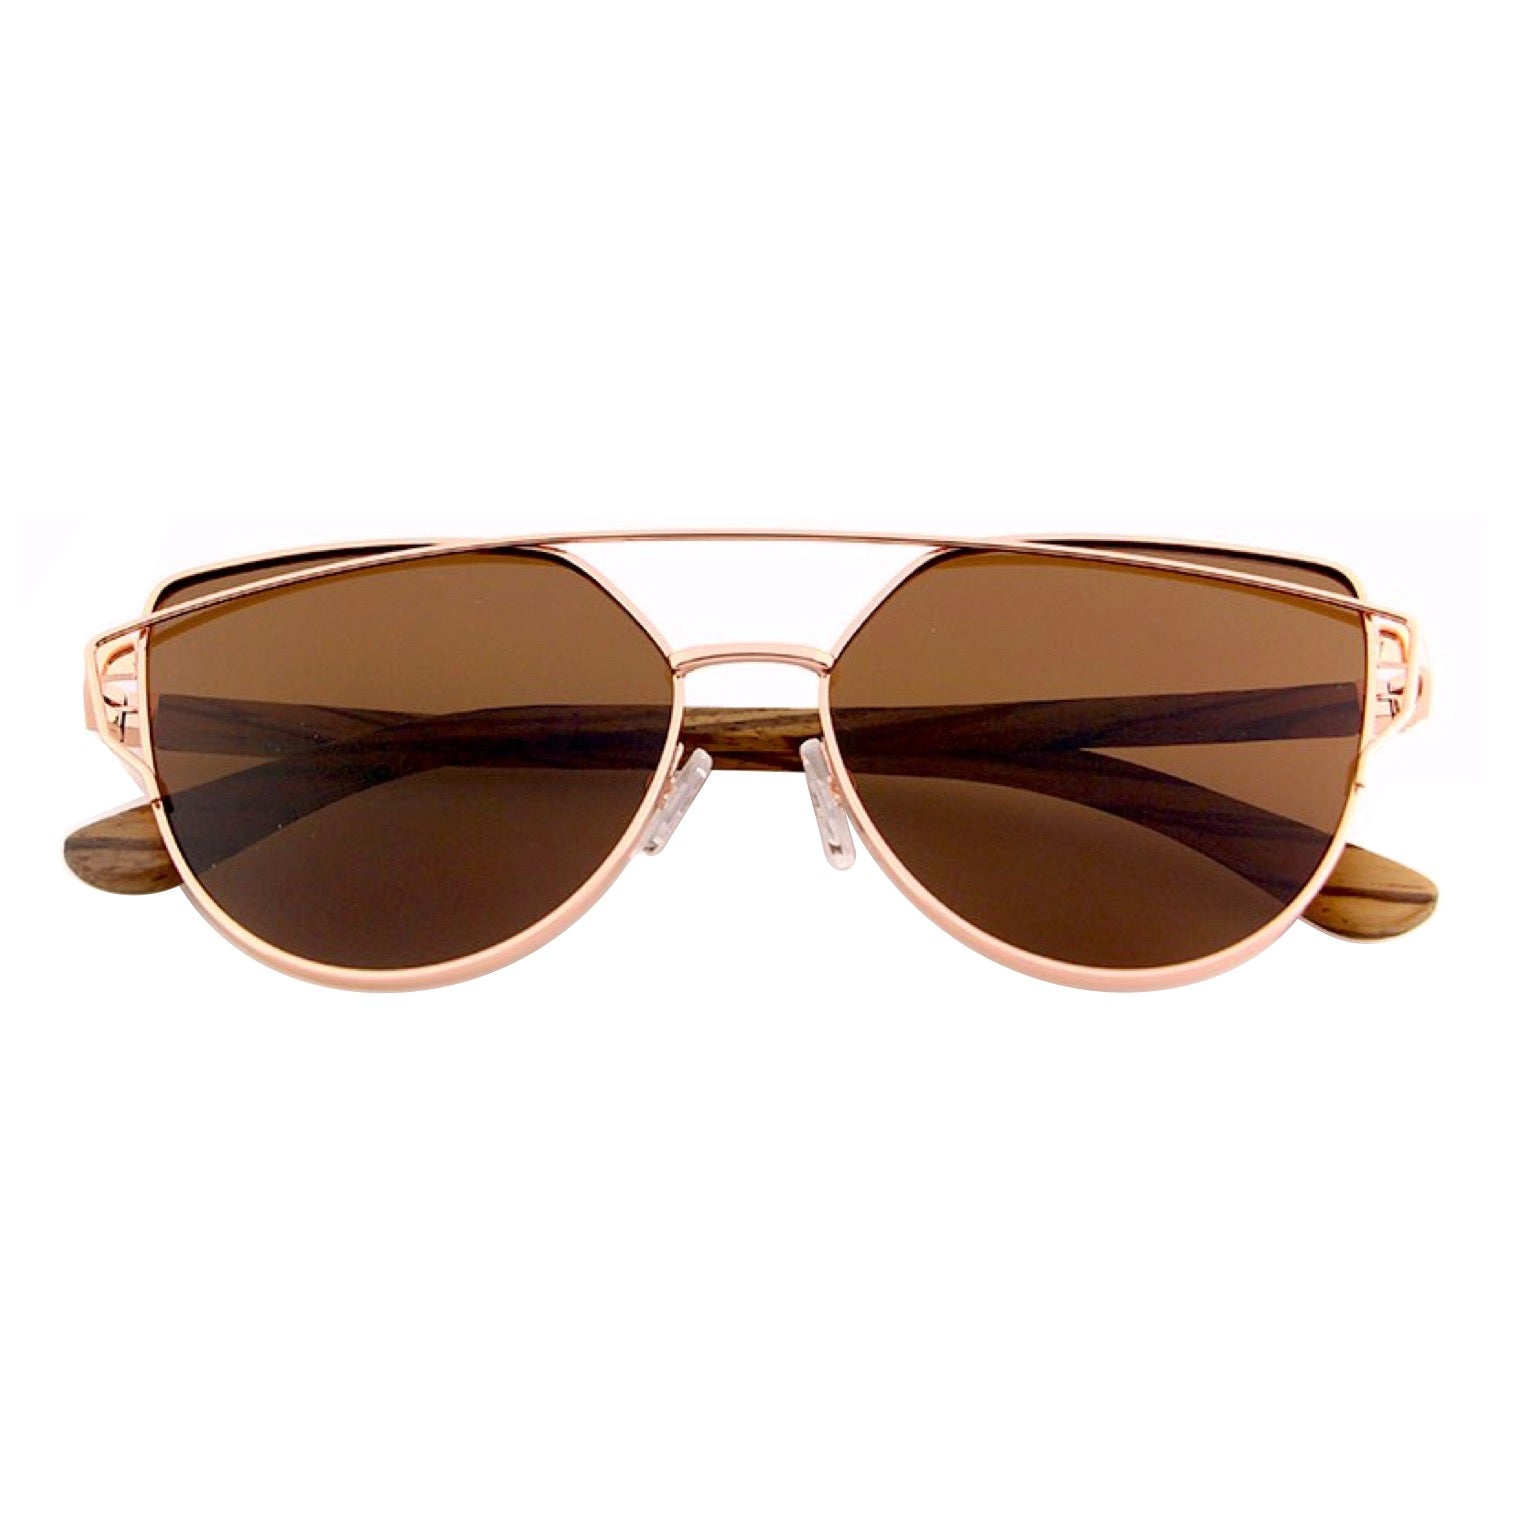 Coco // Polarized Brown Cat-Eye Sunglasses